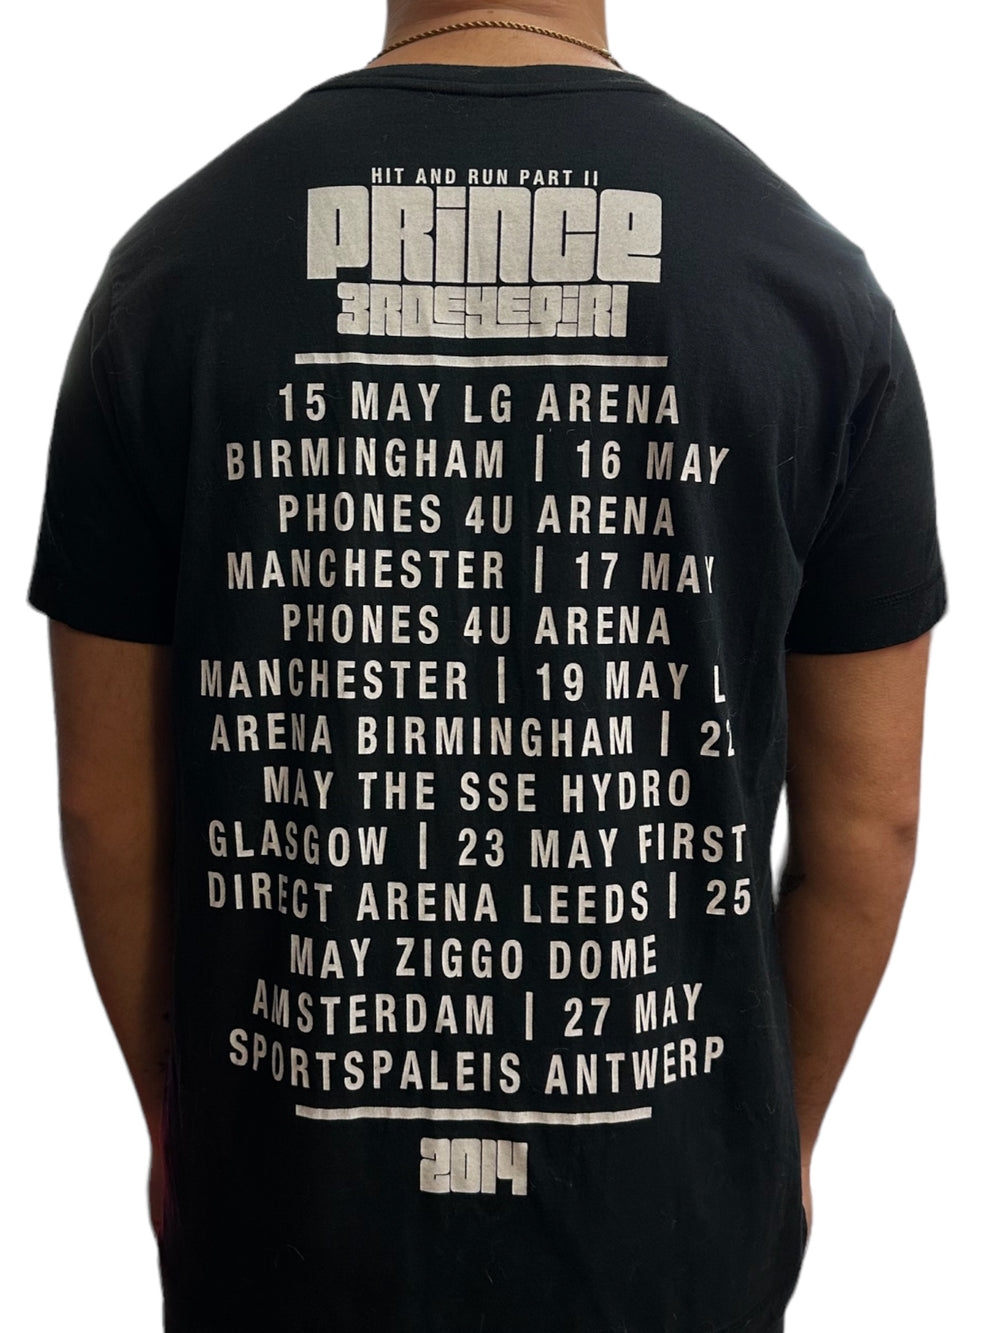 Prince – 3RDEYEGIRL- LIVE Design Official Tour Unisex T Shirt Back Printed MINT: LARGE